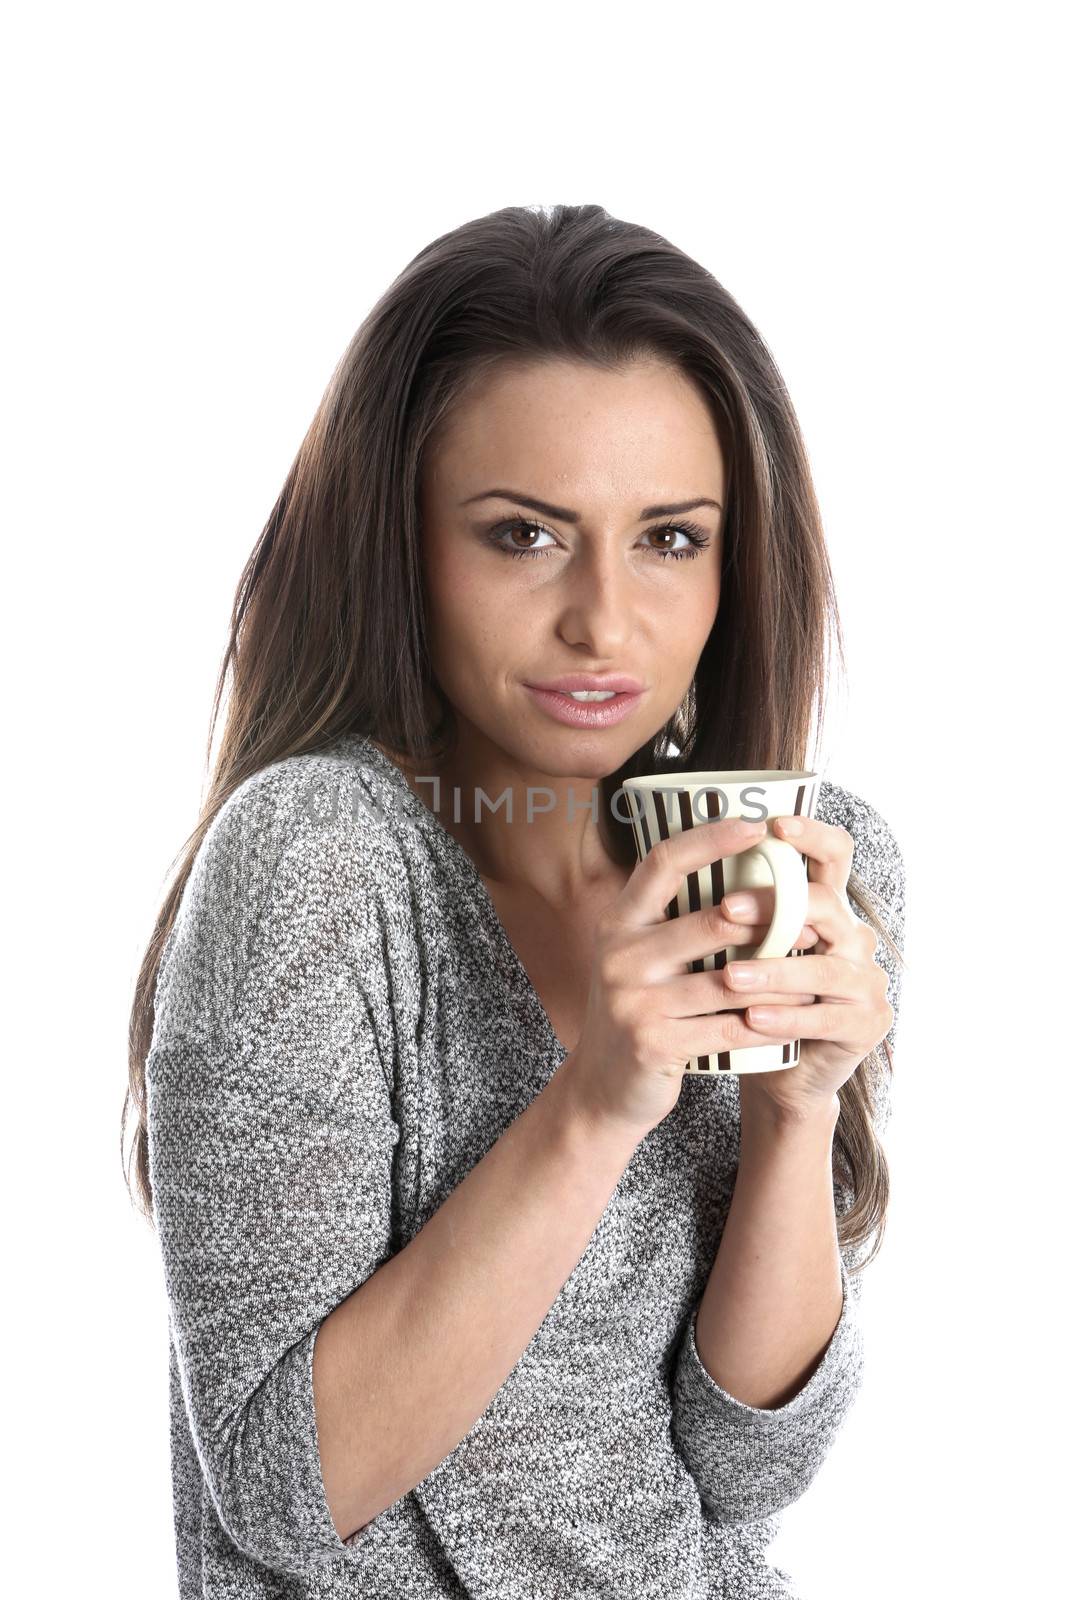 Model Released. Woman Drinking a Mug of Tea